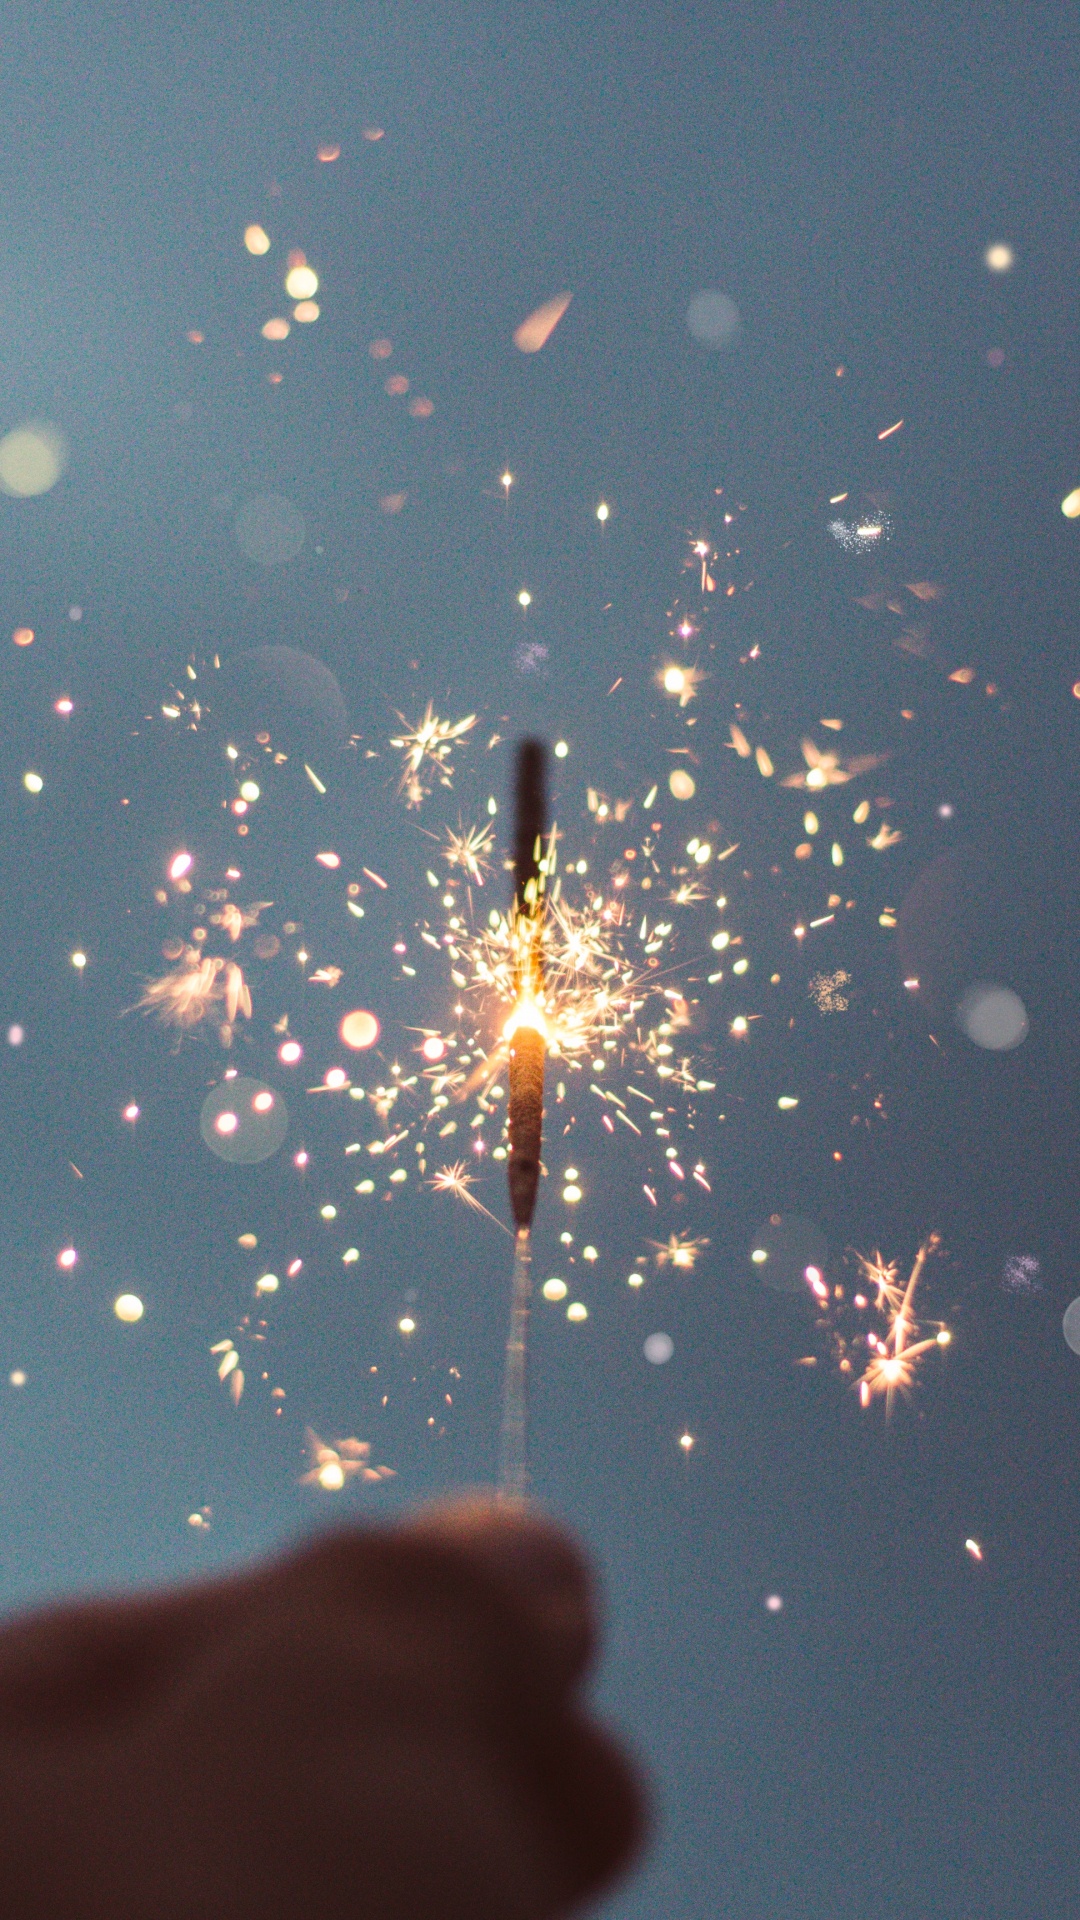 New Year, Water, Sparkler, Fireworks, Hand. Wallpaper in 1080x1920 Resolution